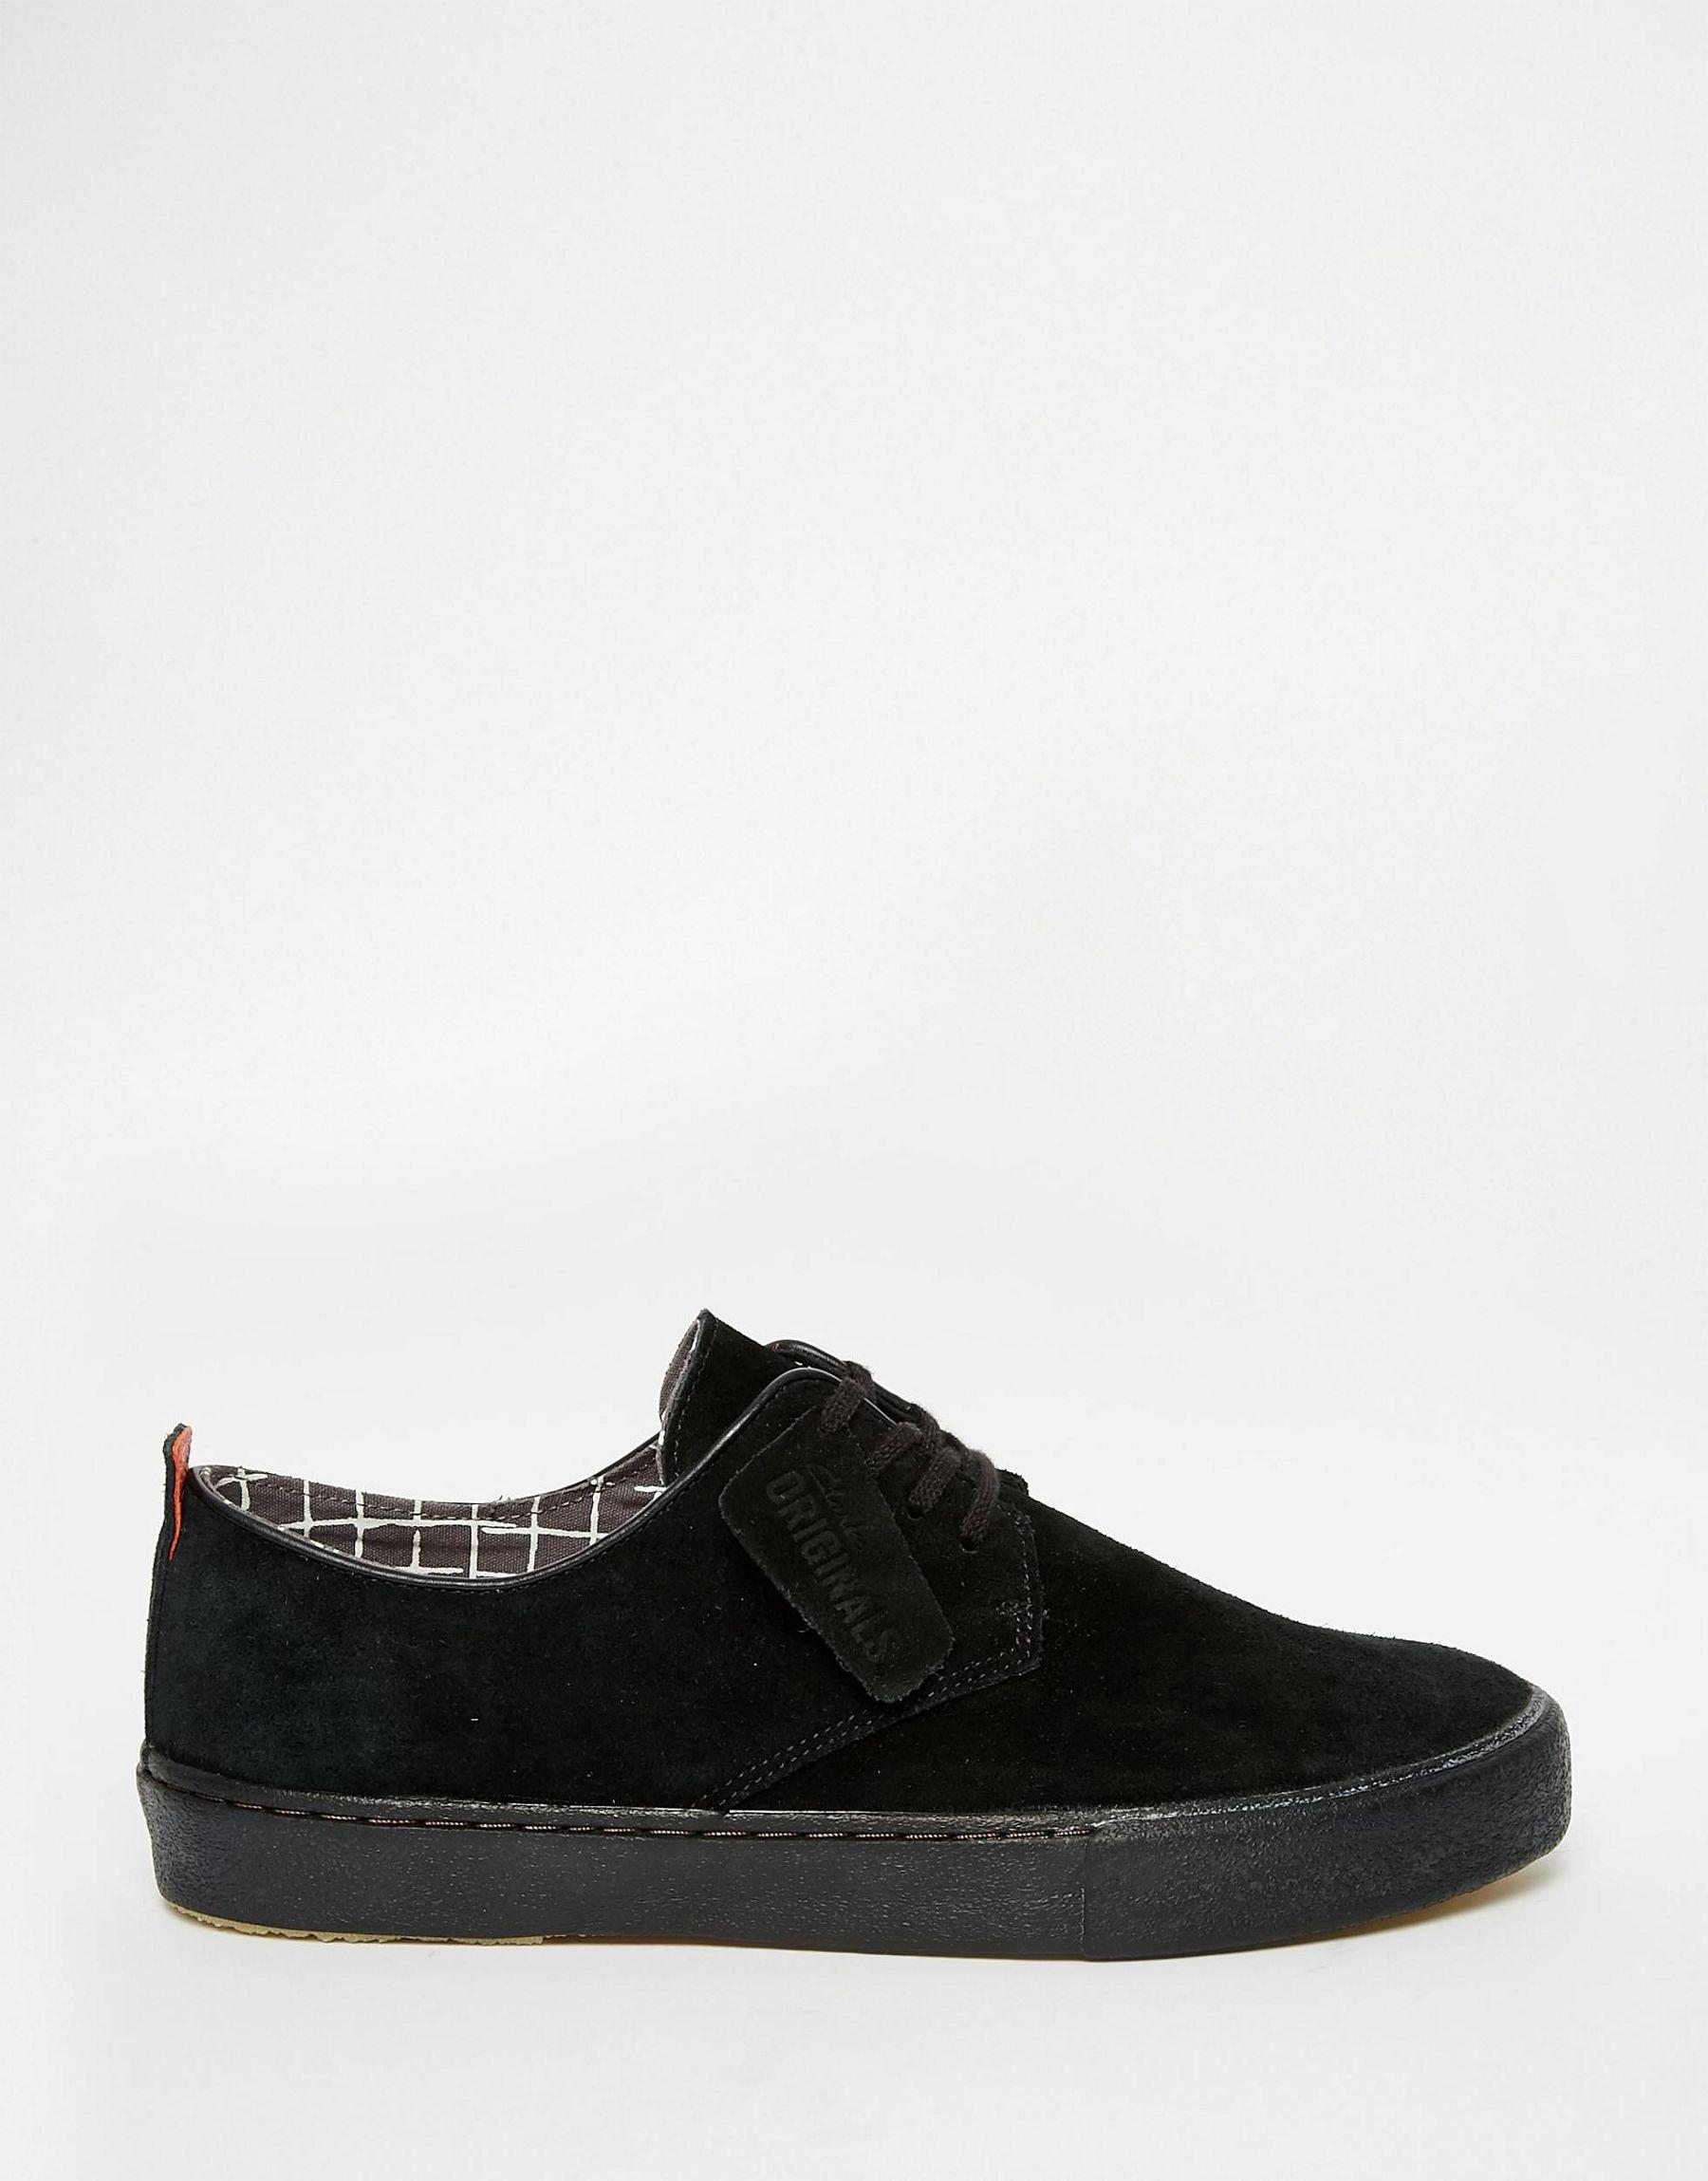 Clarks Suede Desert Vulc Shoes - Black for Men - Lyst